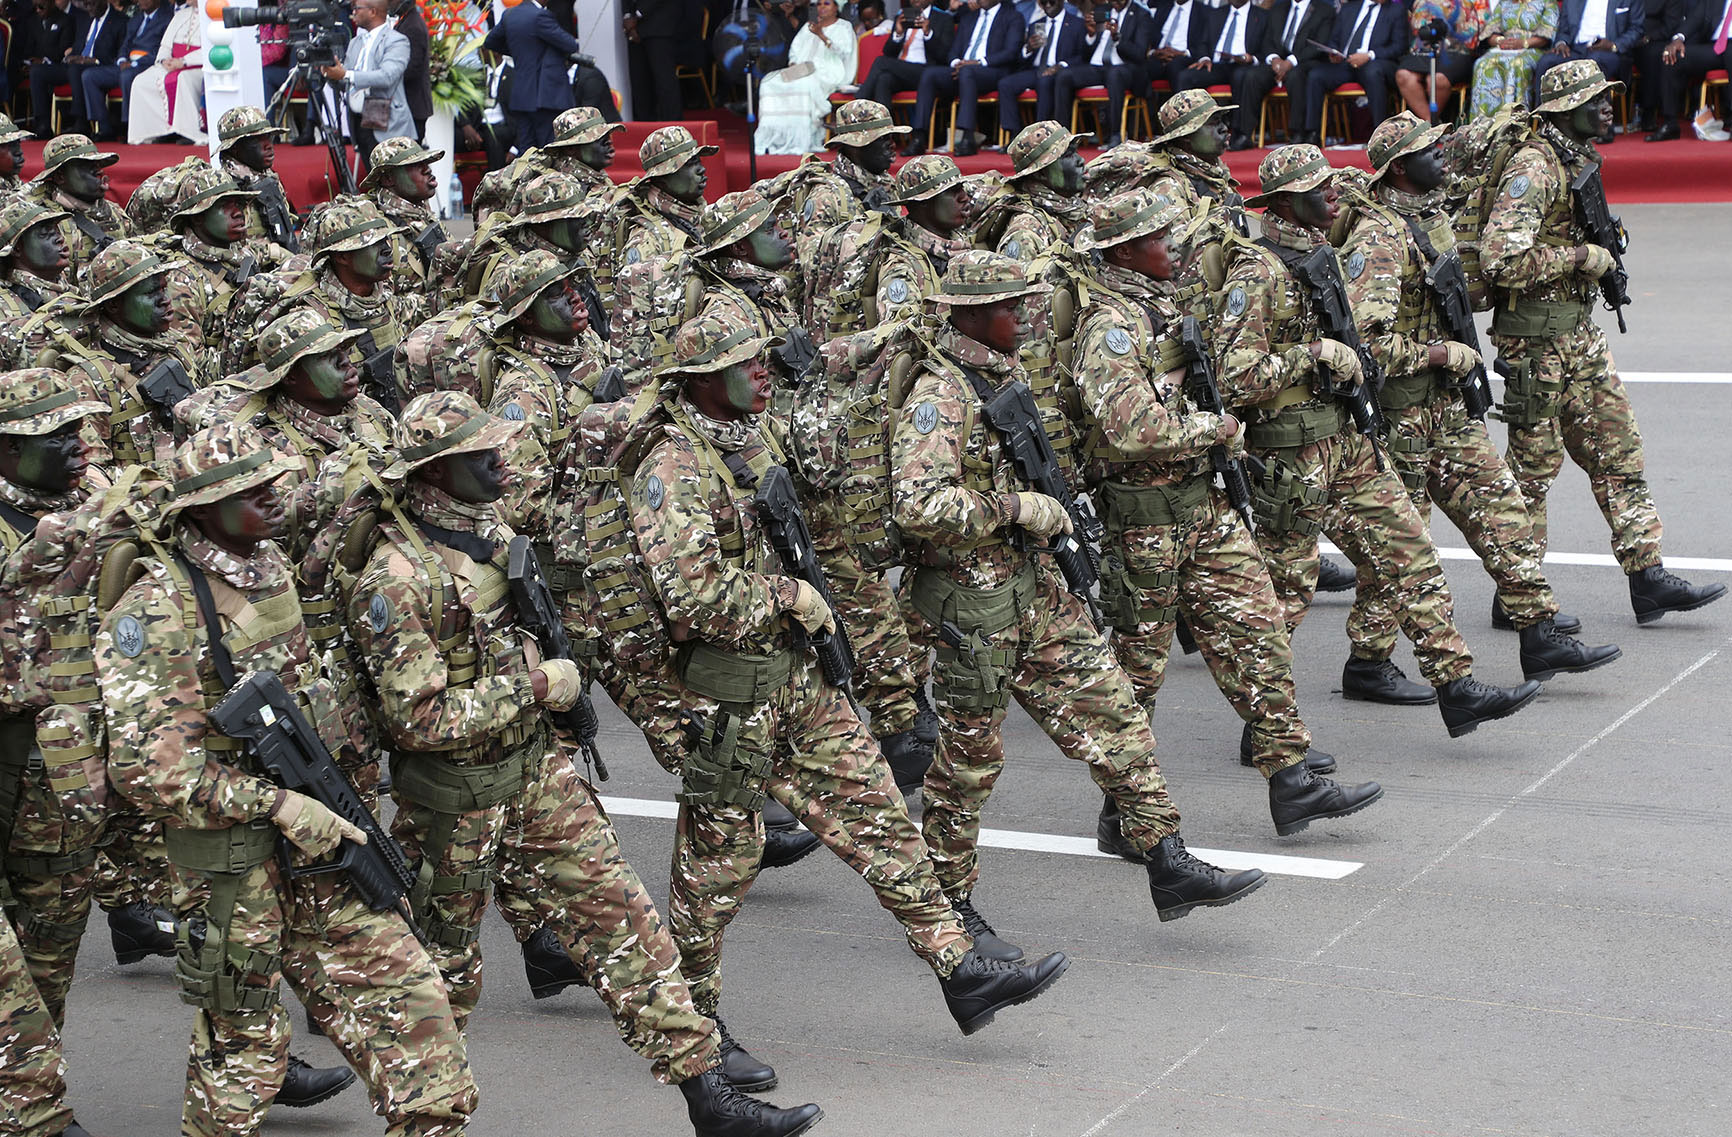 soldats-ivoiriens-detenus-au-mali-ils-regagneront-bientot-le-sol-ivoirien-rassure-alassane-ouattara